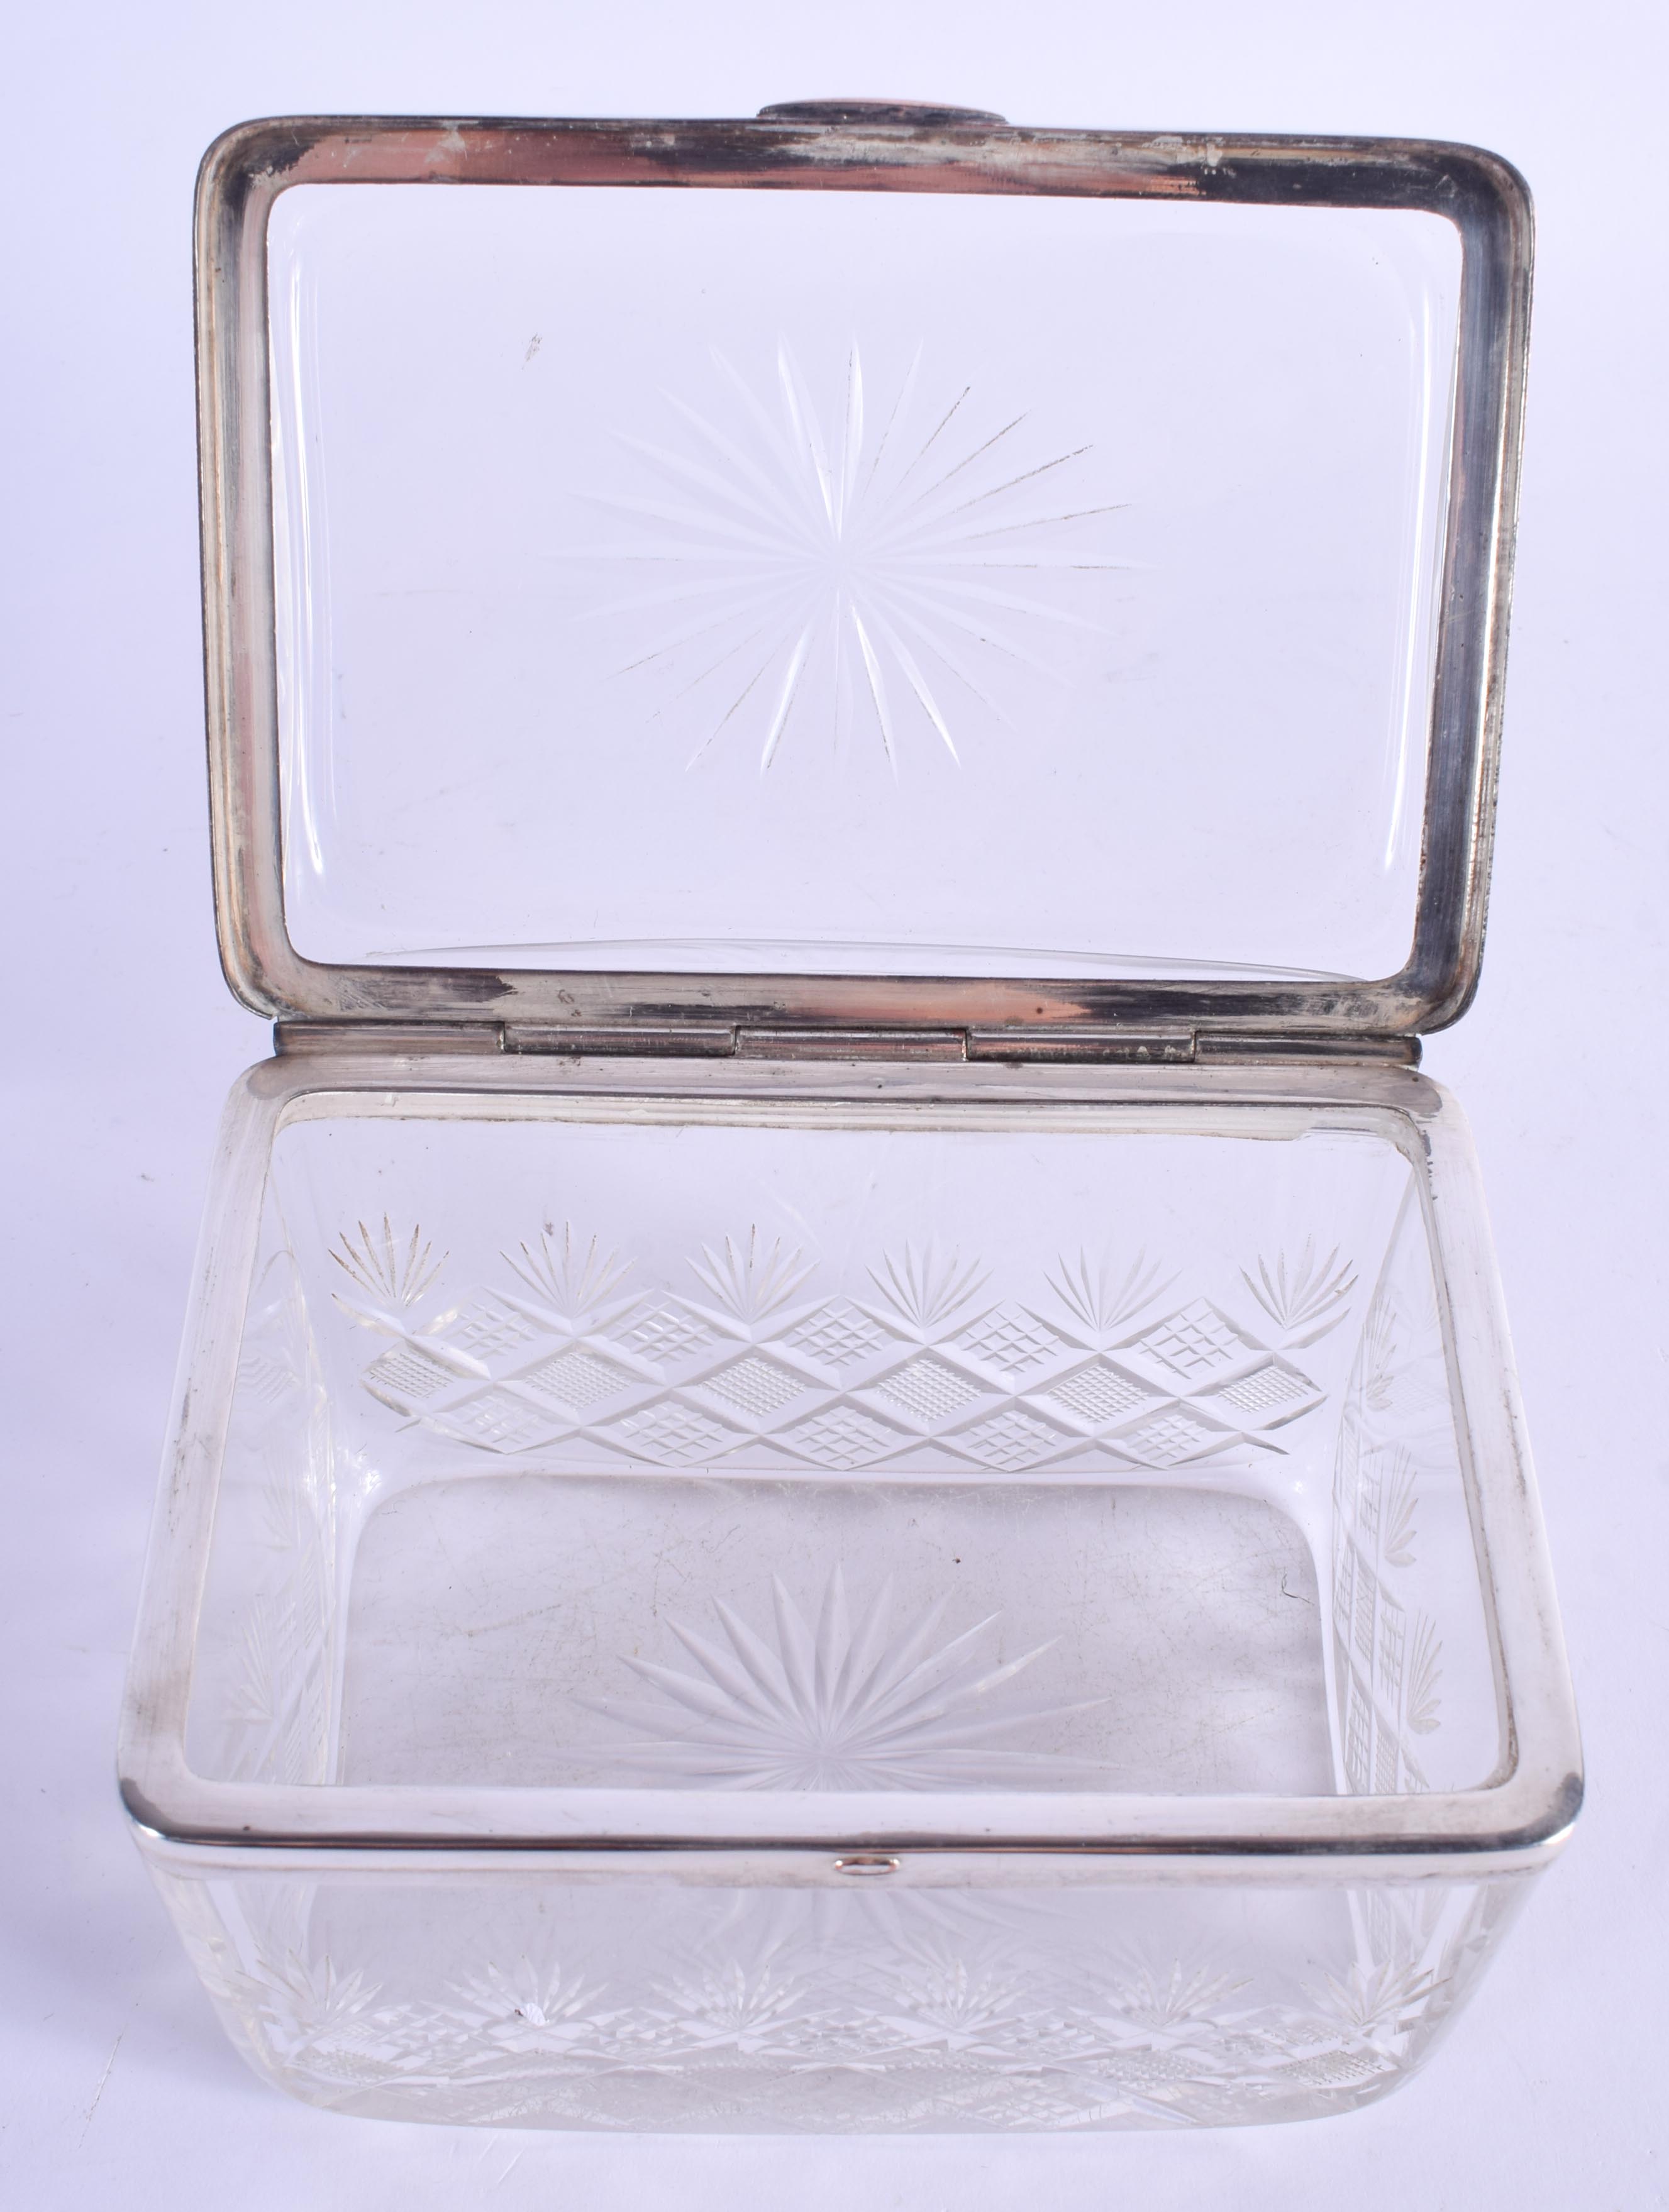 AN ANTIQUE CRYSTAL GLASS CASKET. 12 cm x 9 cm. - Image 3 of 3